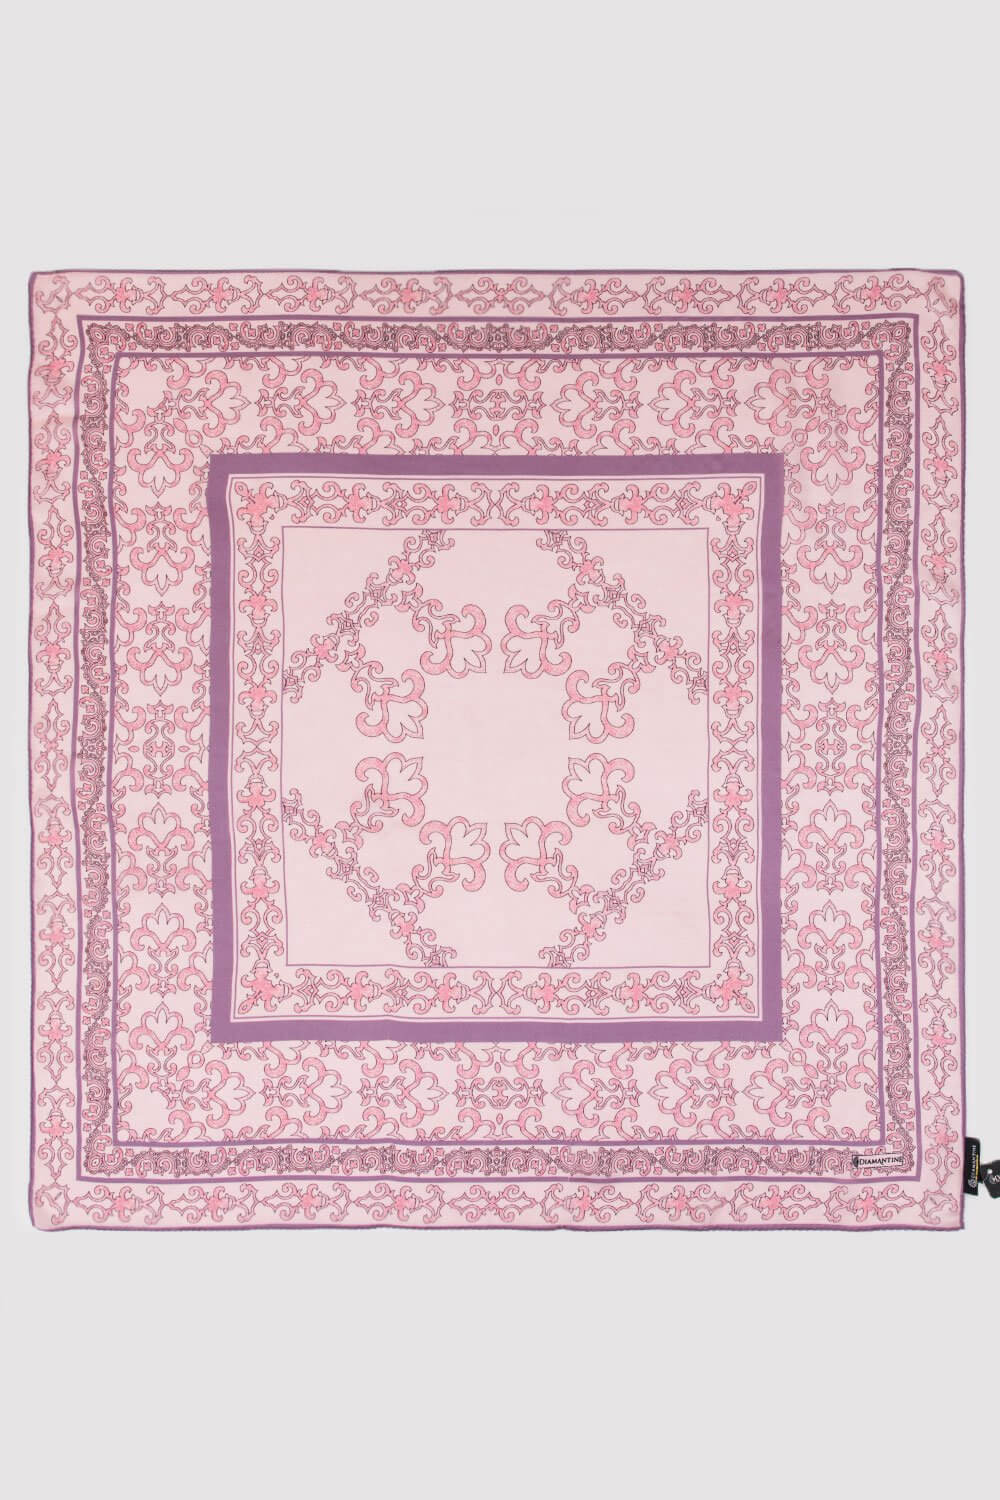 Silk Satin Scarf in Pink & Mauve Print